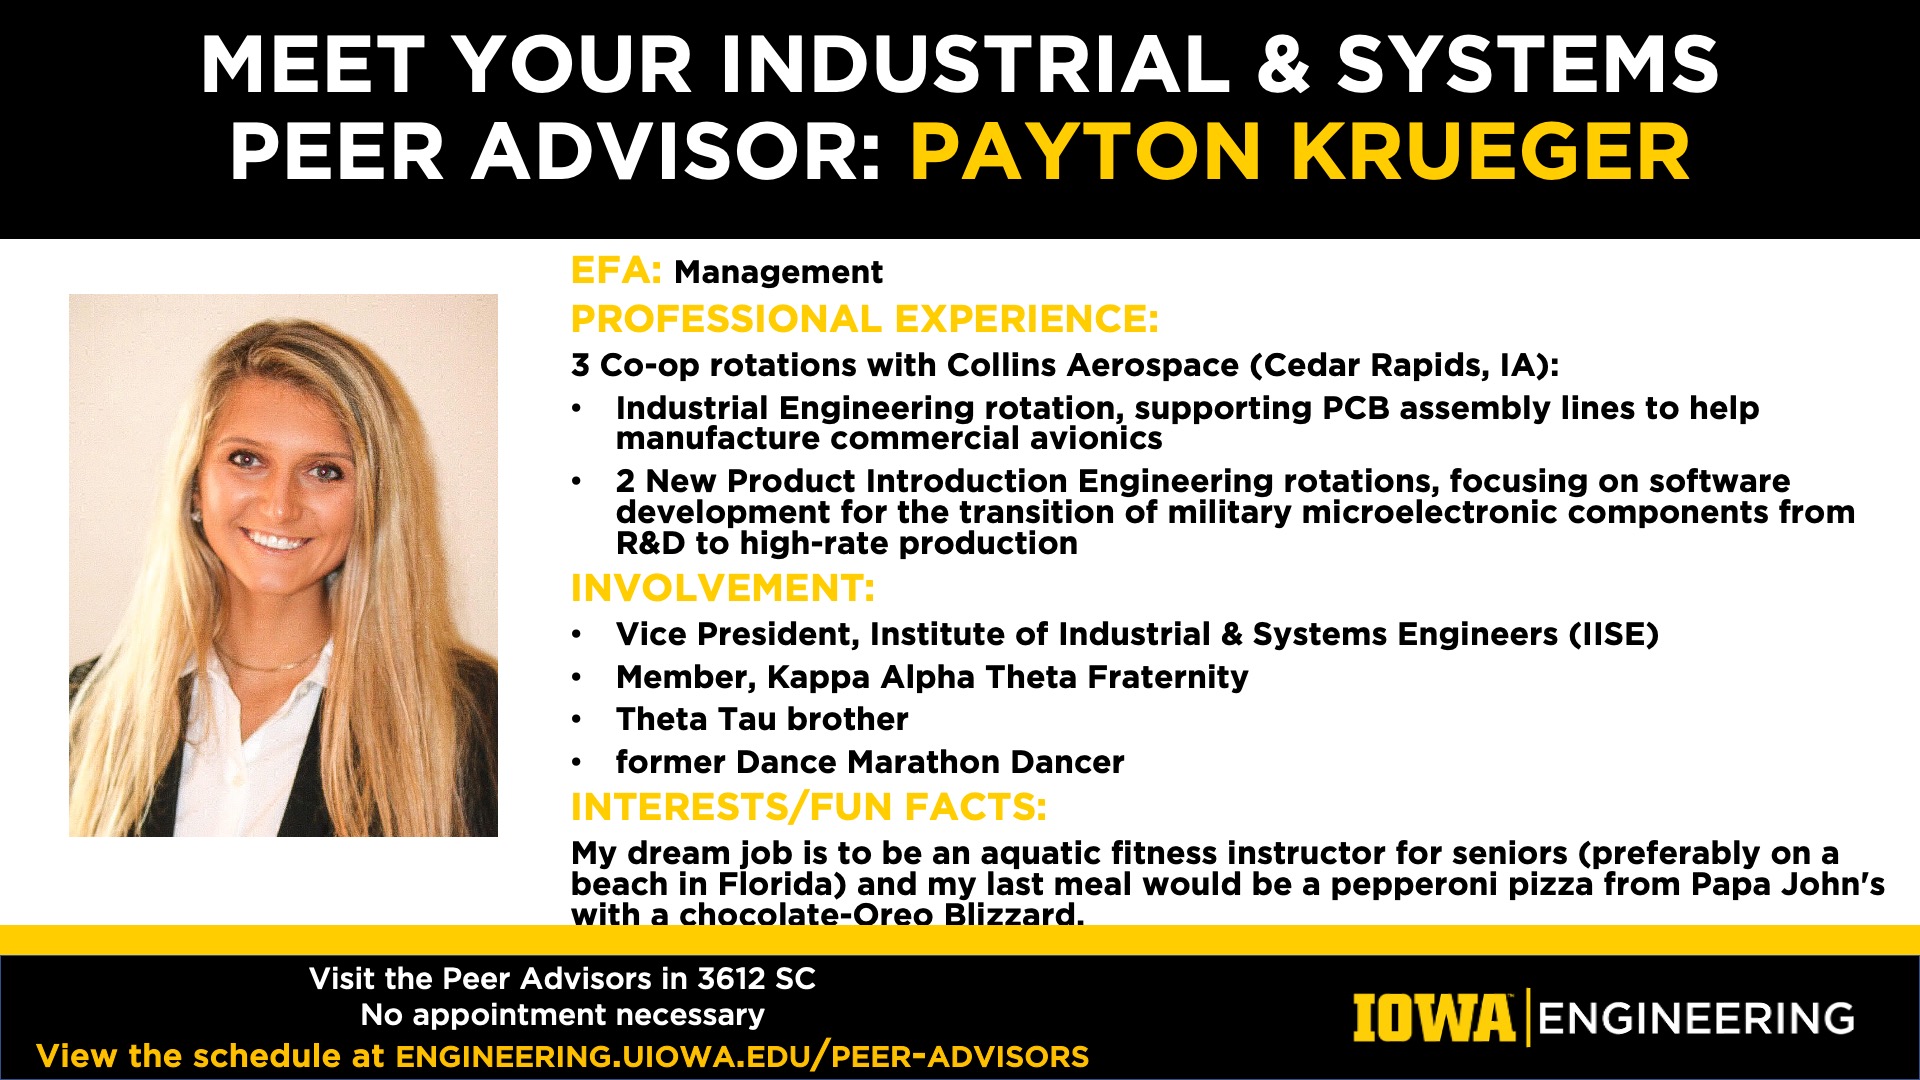 meet payton Krueger, peer advisor